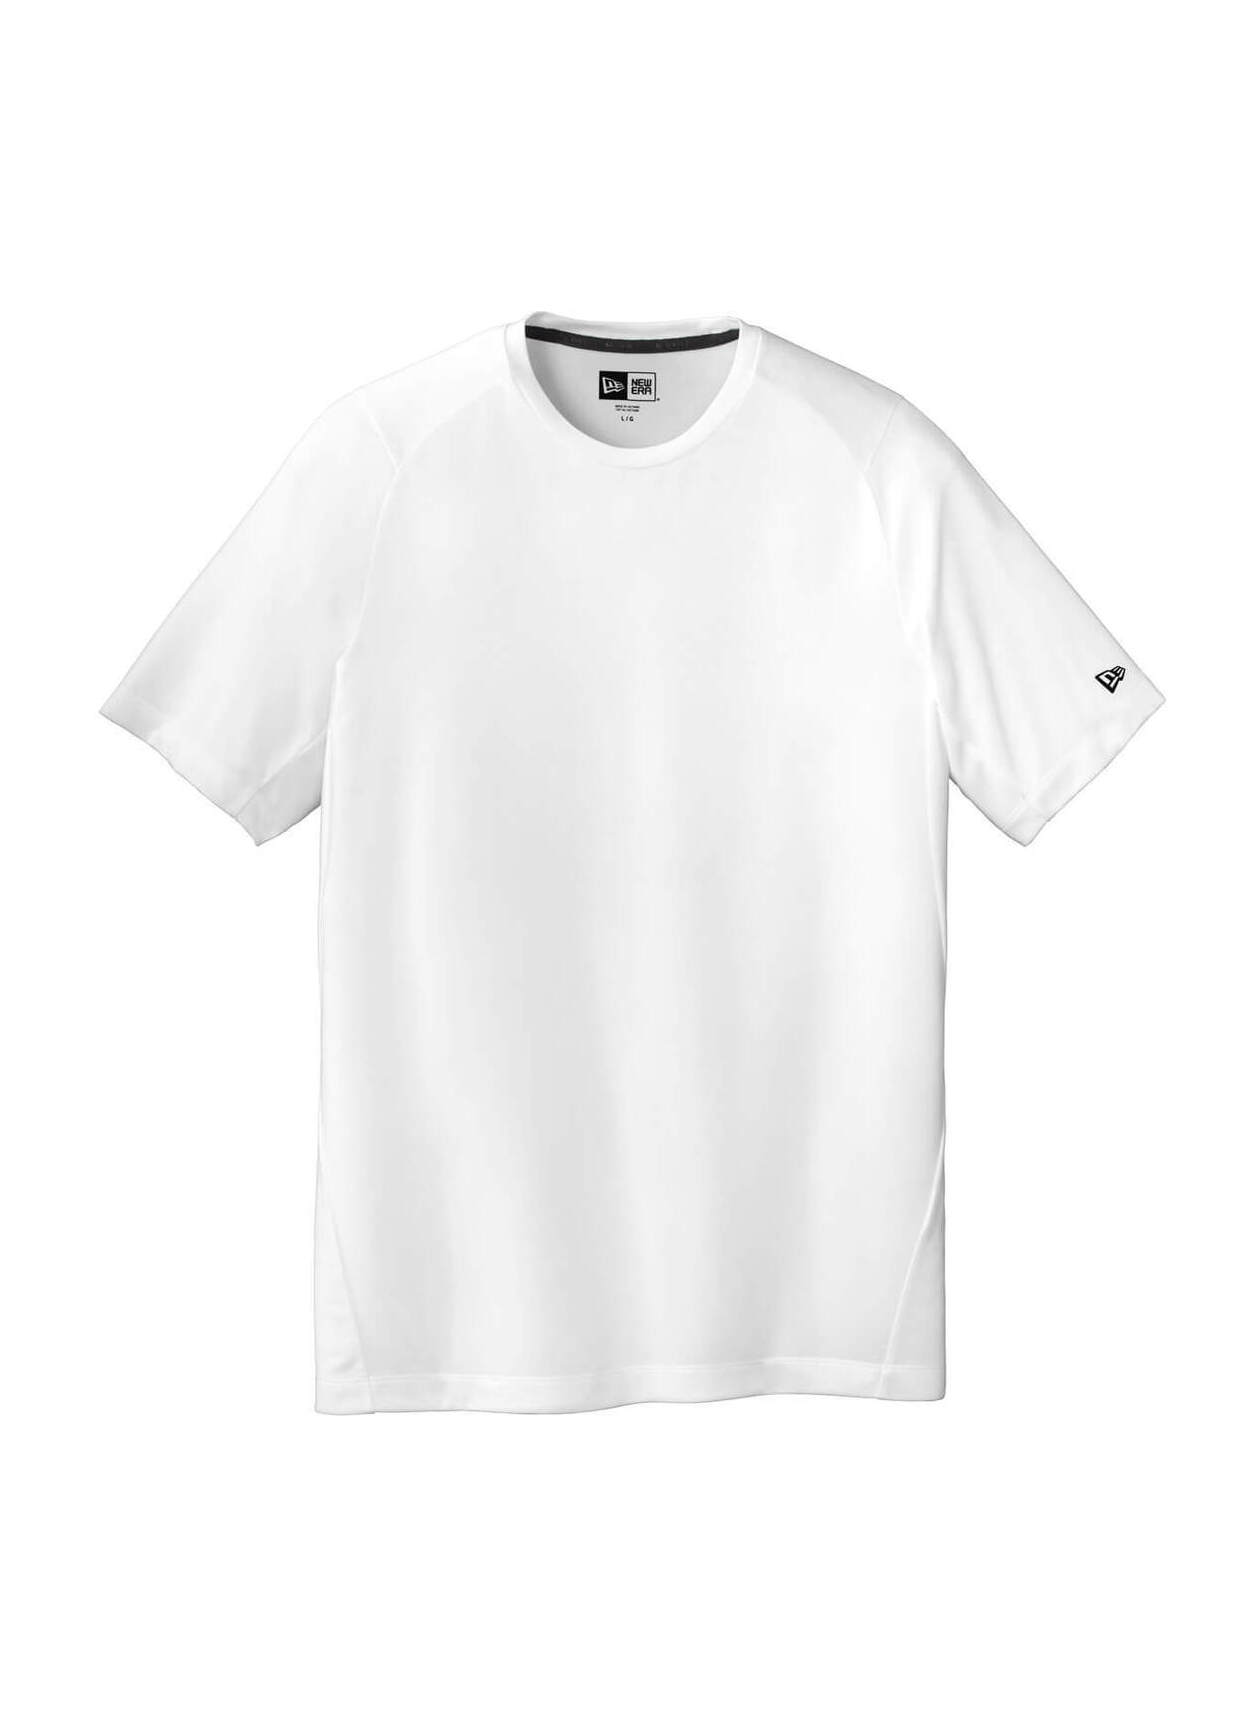 New Era Men's White Series Performance Crew T-Shirt